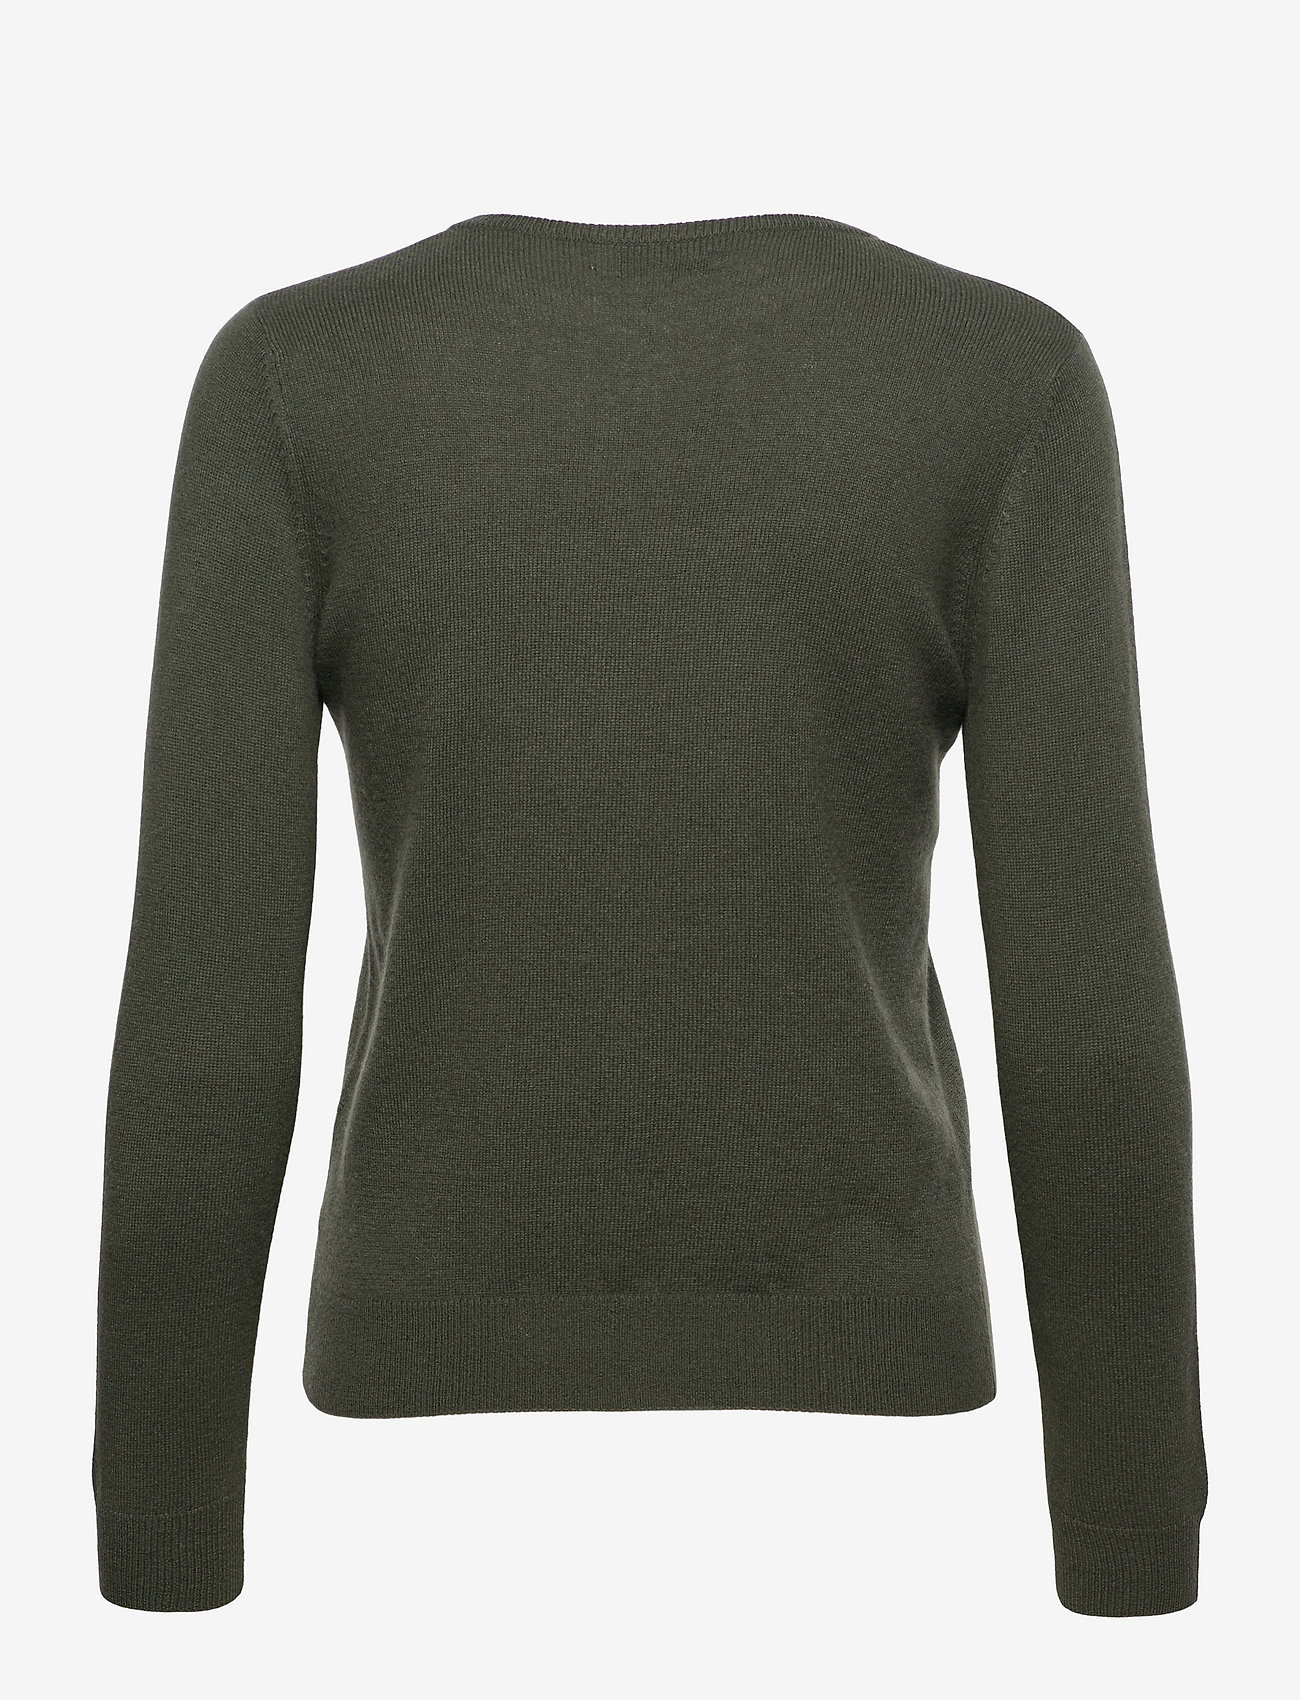 Davida Cashmere - Basic O-neck Sweater - army green - 1